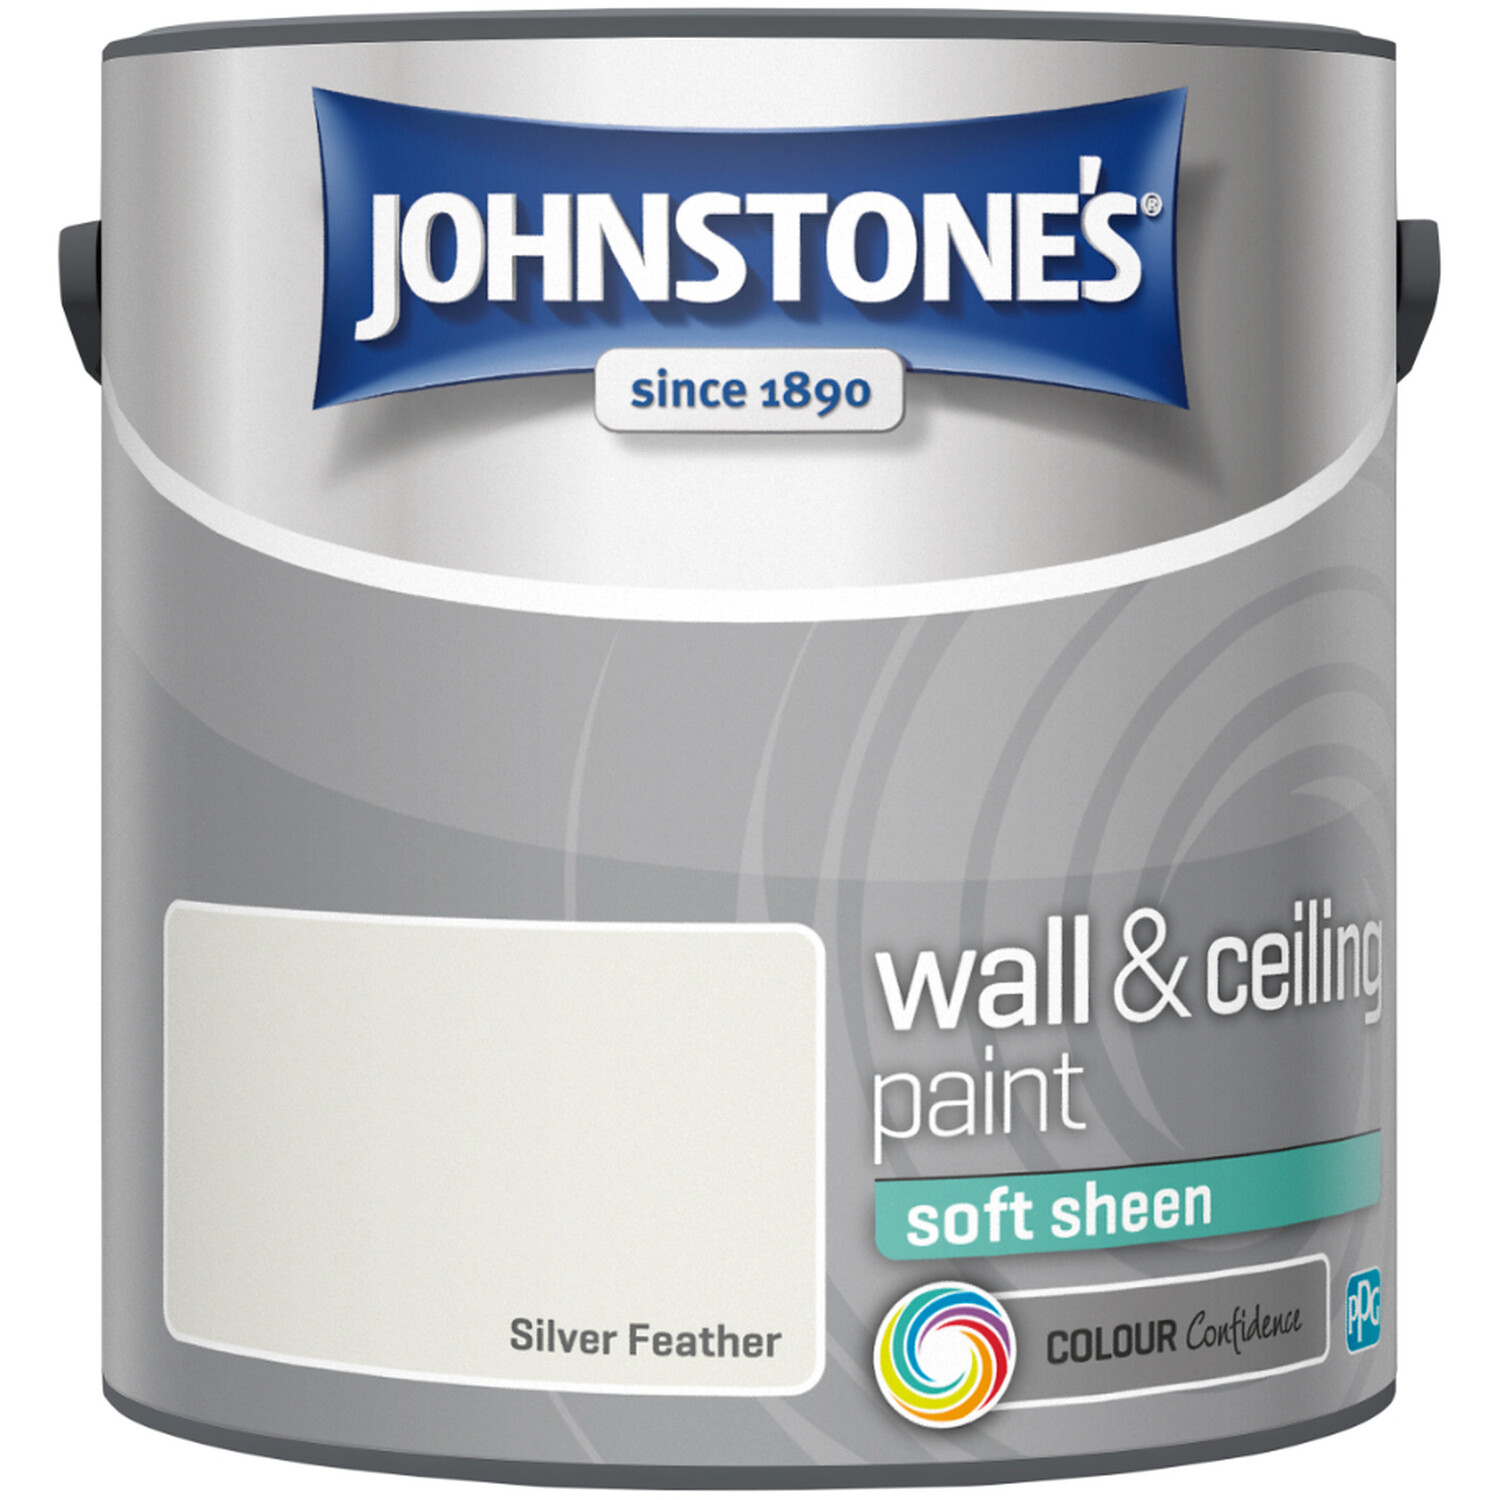 Johnstones Soft Sheen Emulsion Paint - Silver Feather / 2.5l Image 2